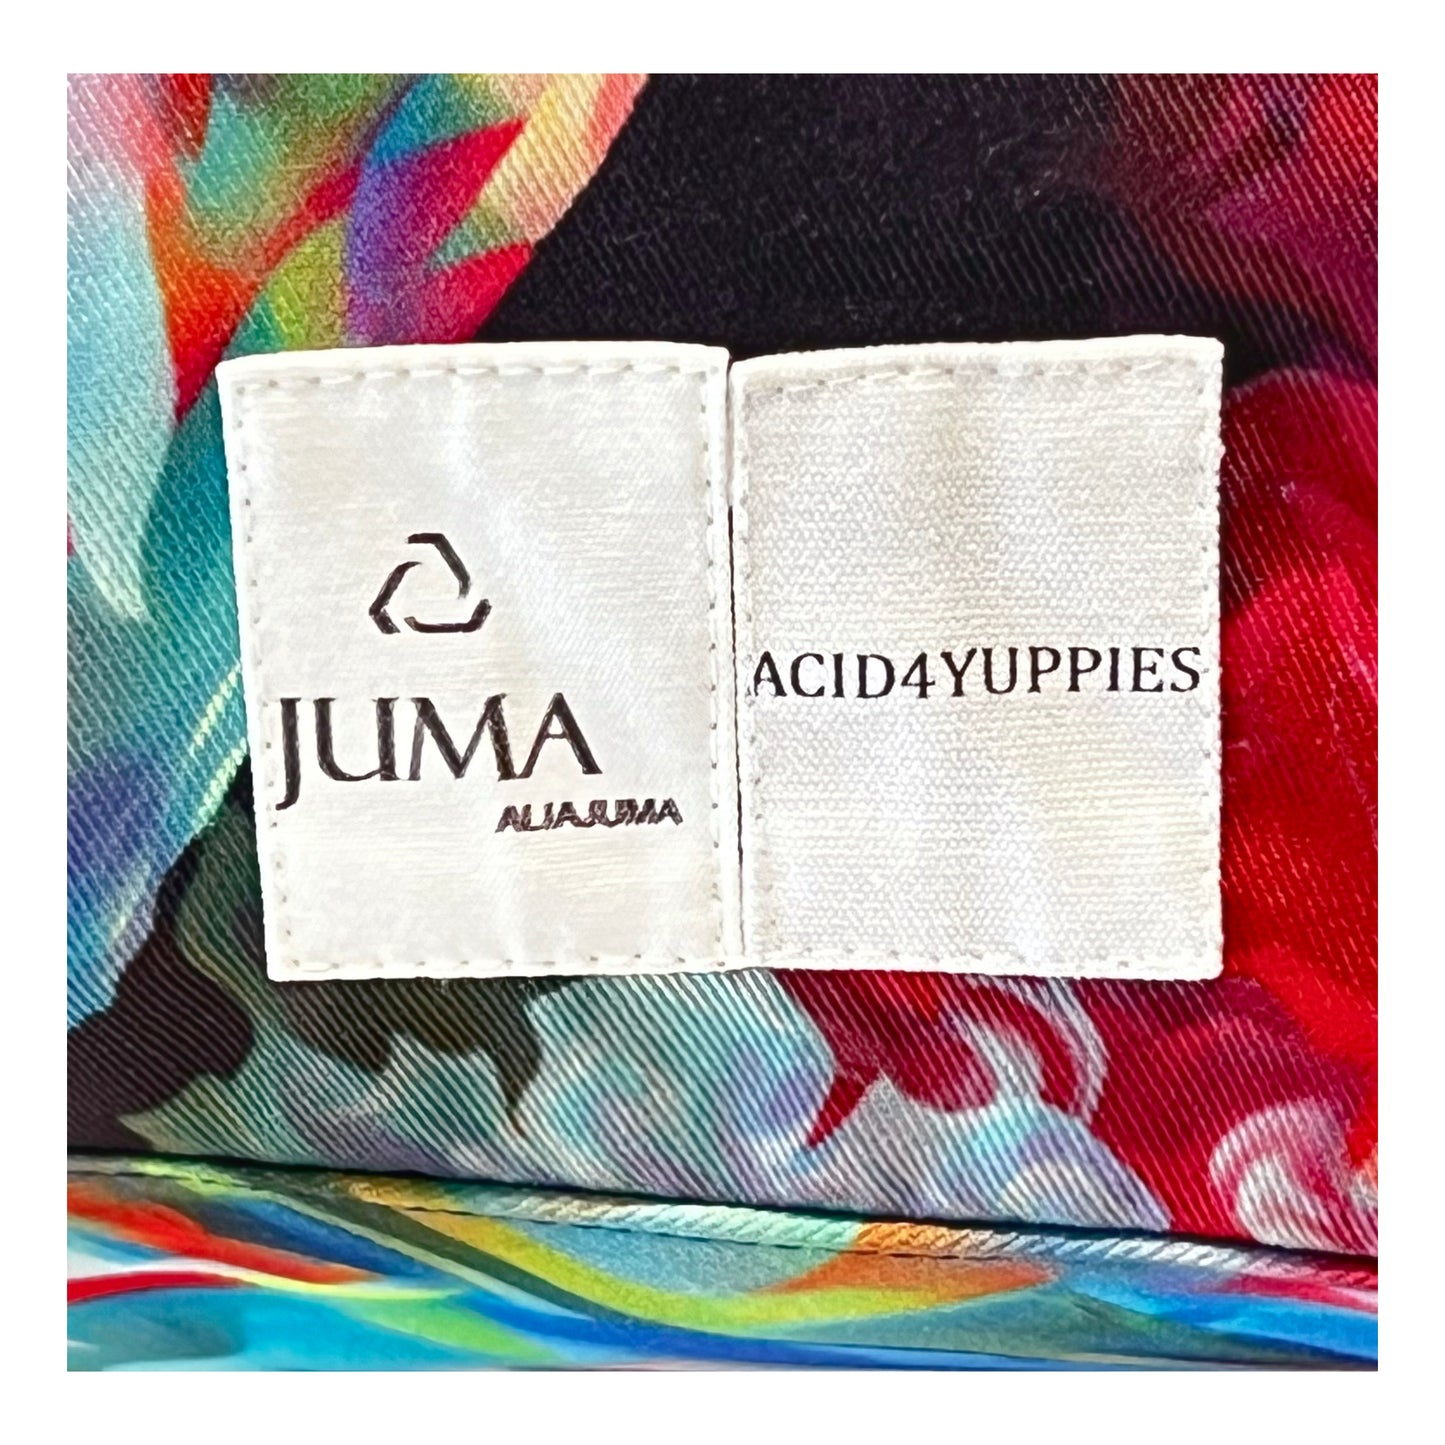 ACID4YUPPIES X JUMA DEADHEAD DANCING Printed Tote Bag